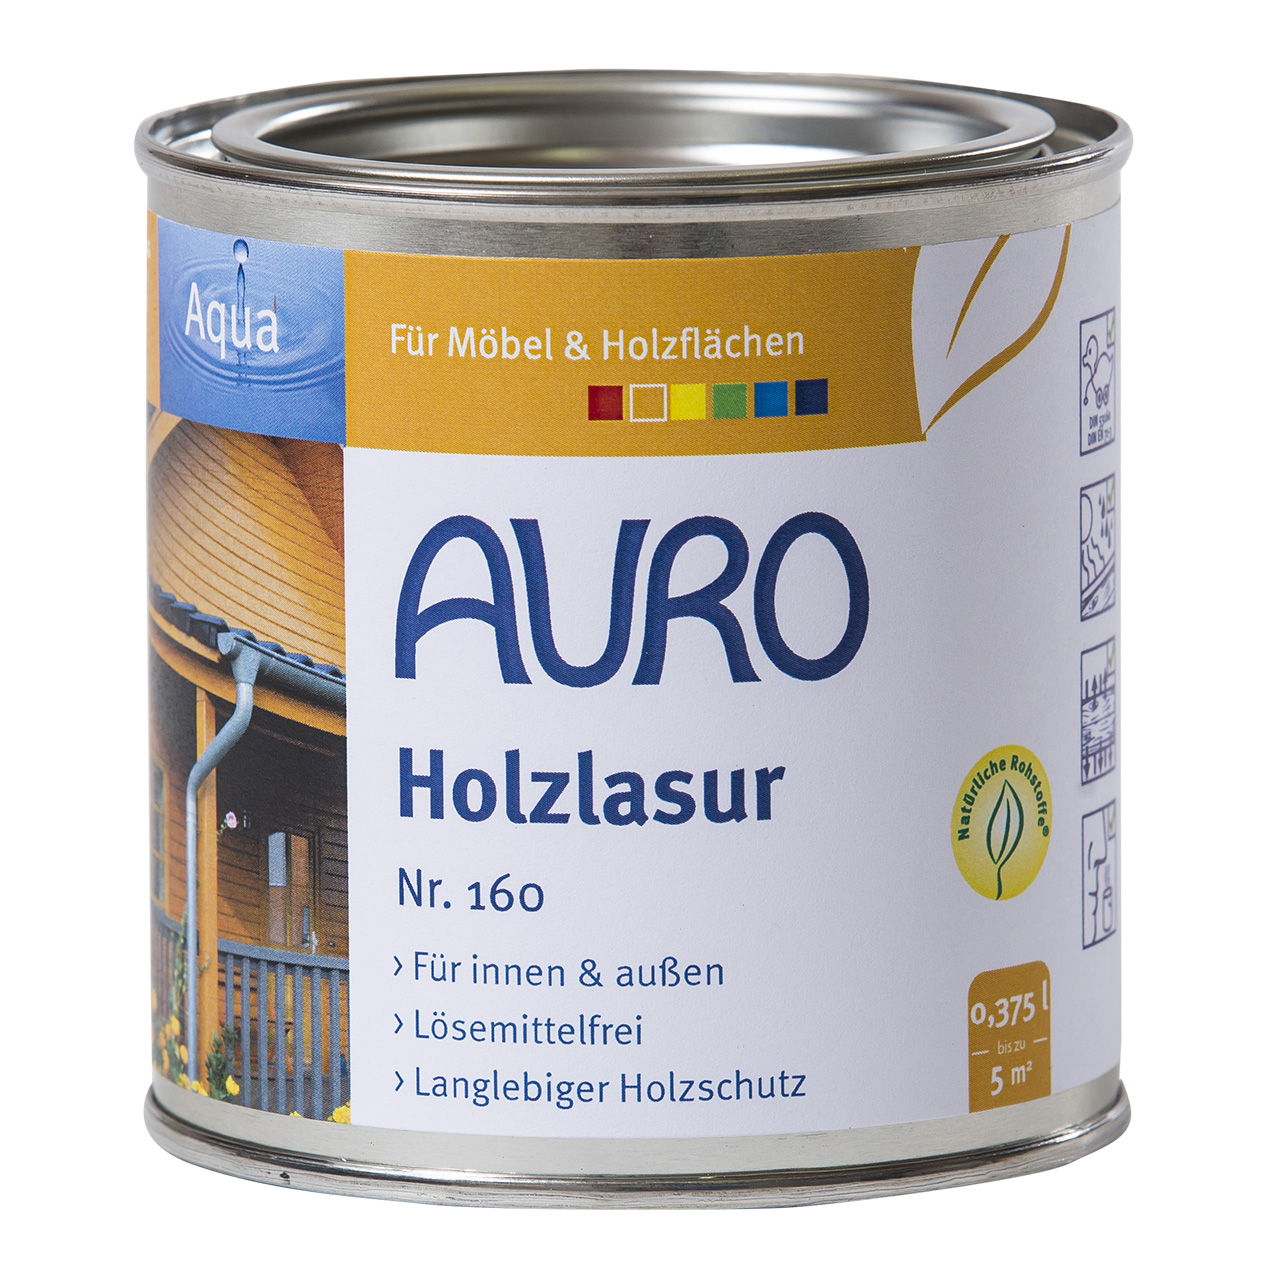 Auro Holzlasur Nr. 160 azur, 0,375ml